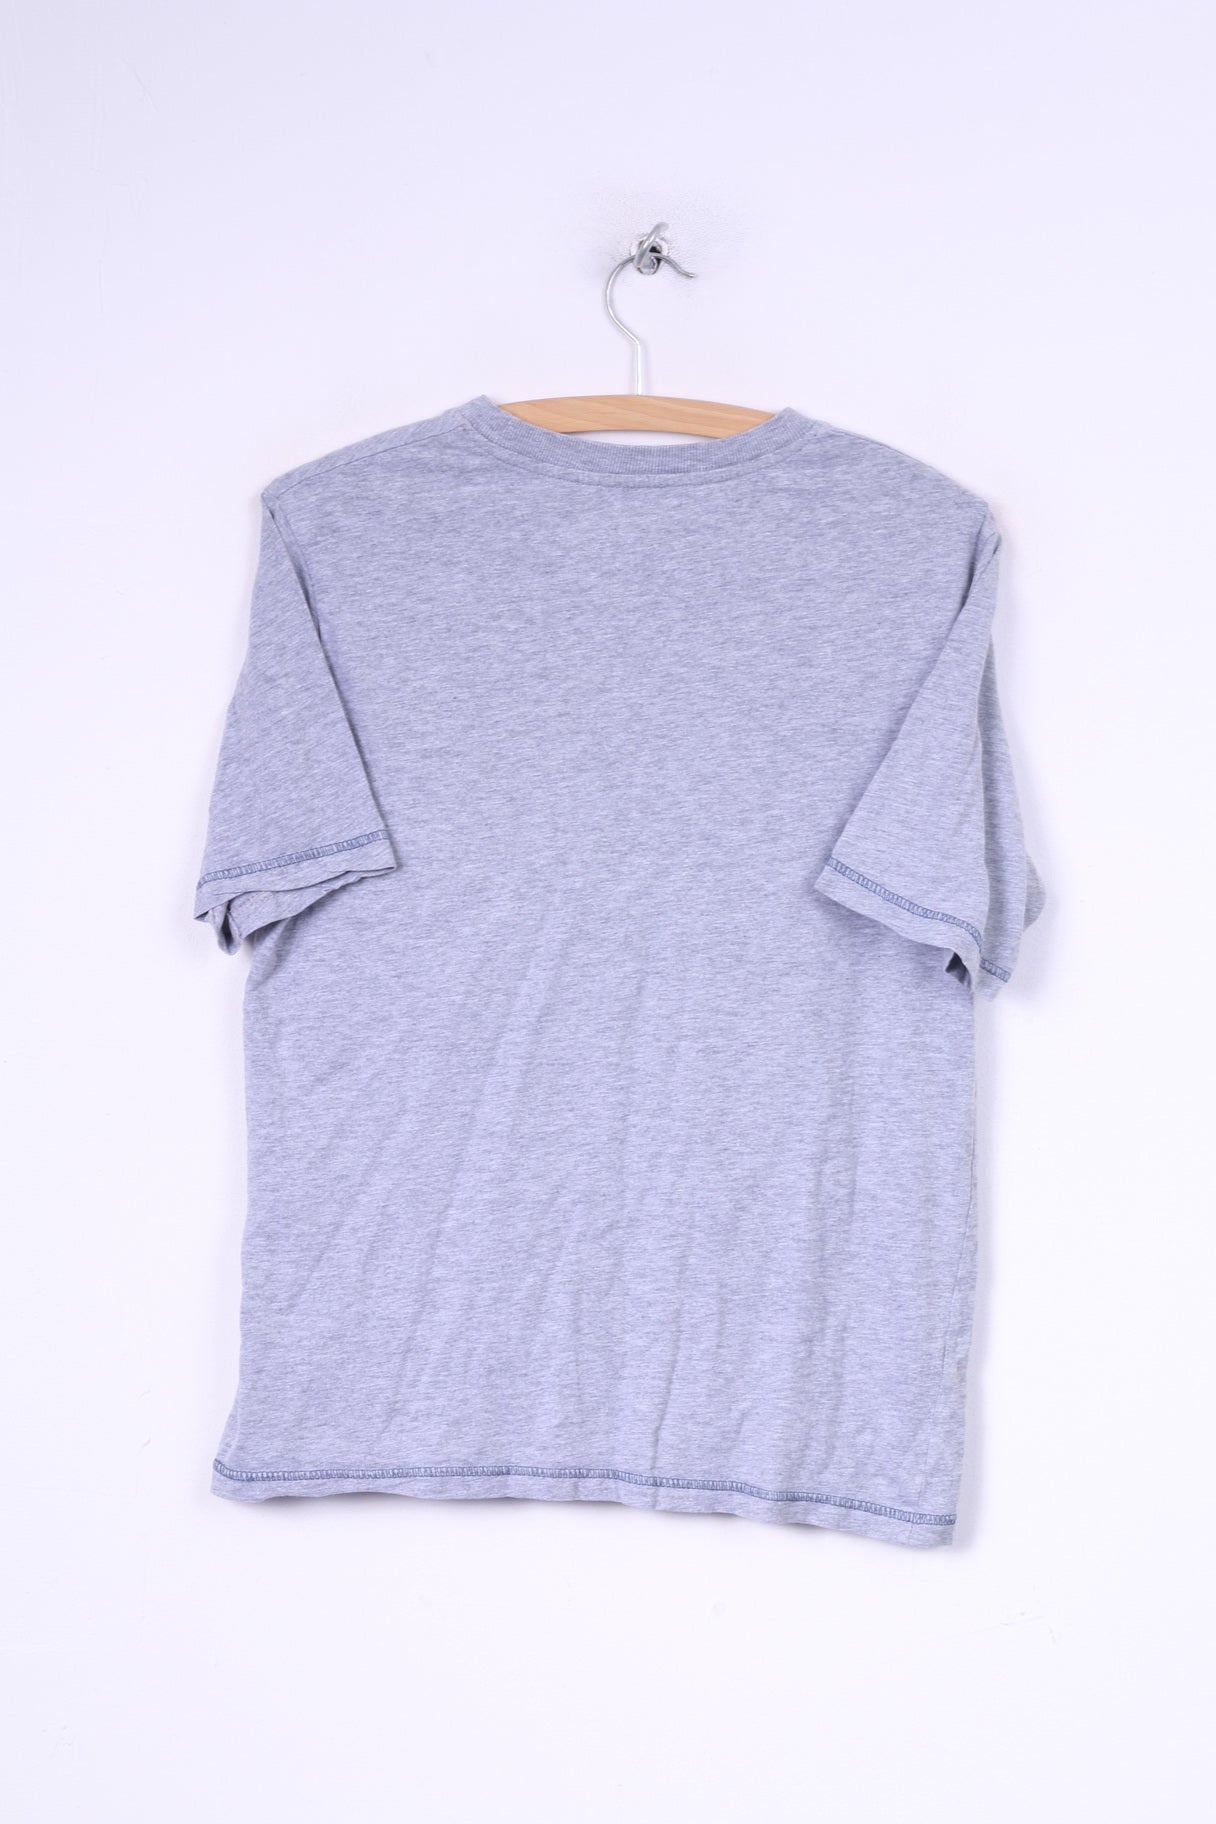 Dunnes Mens S 33/34 T-Shirt Graphic Grey Cotton Generation Vinyl Top